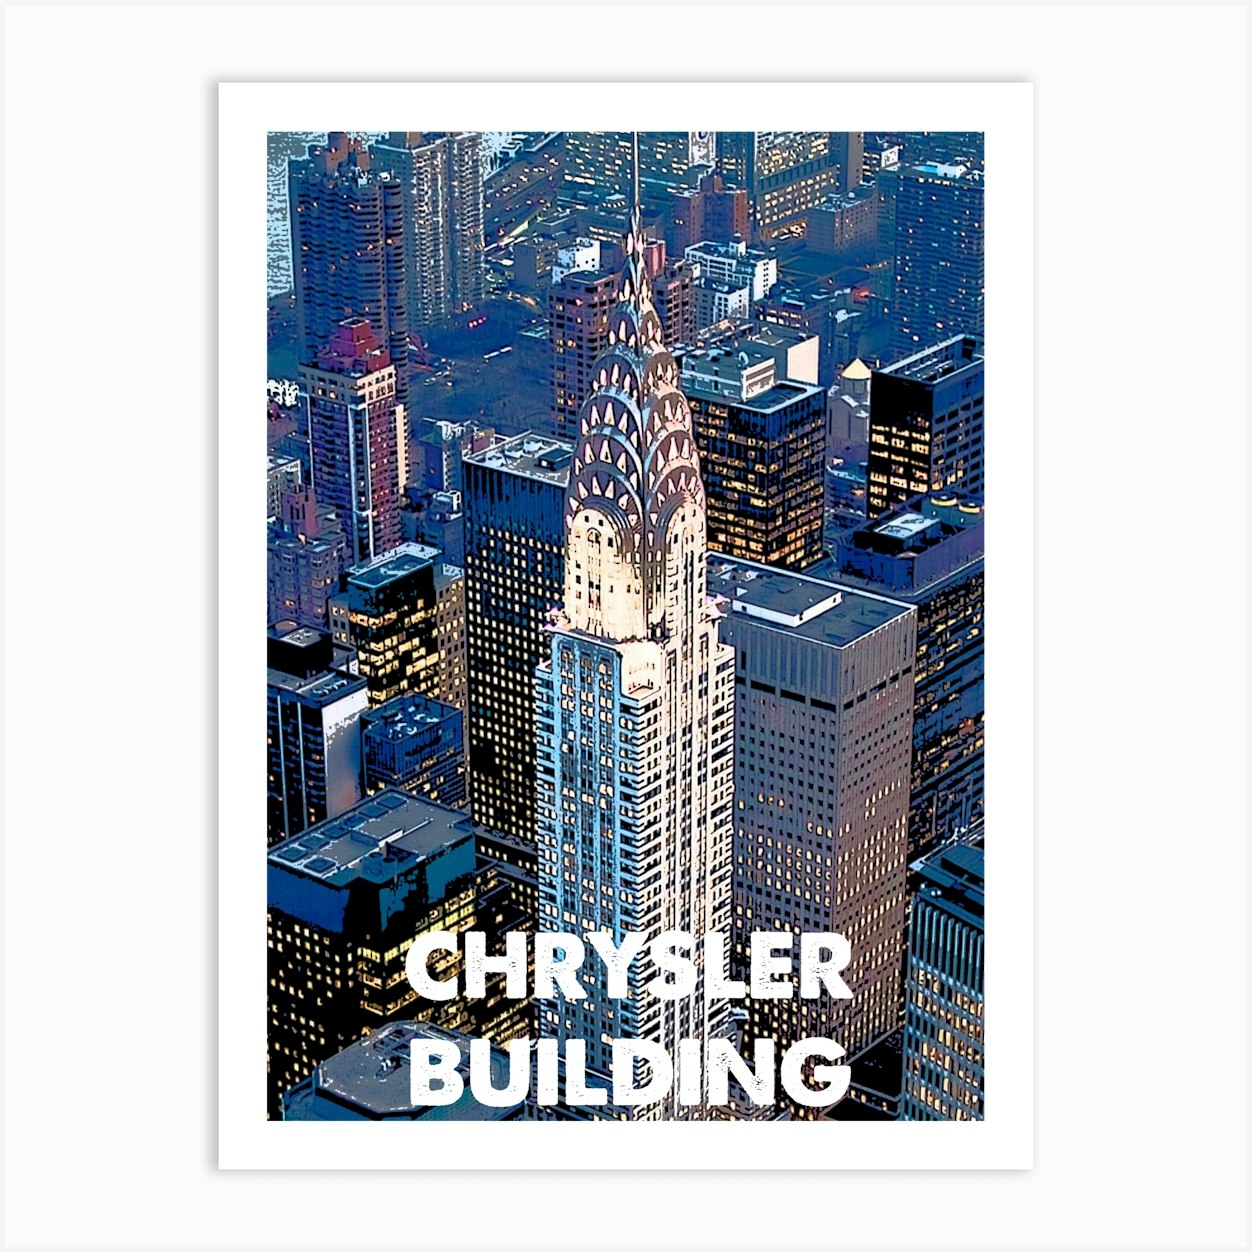 Art, Wall Building, PrintDeco by Wall Print, Art Poster, Print, - Landmark, York, Fy New Print Chrysler